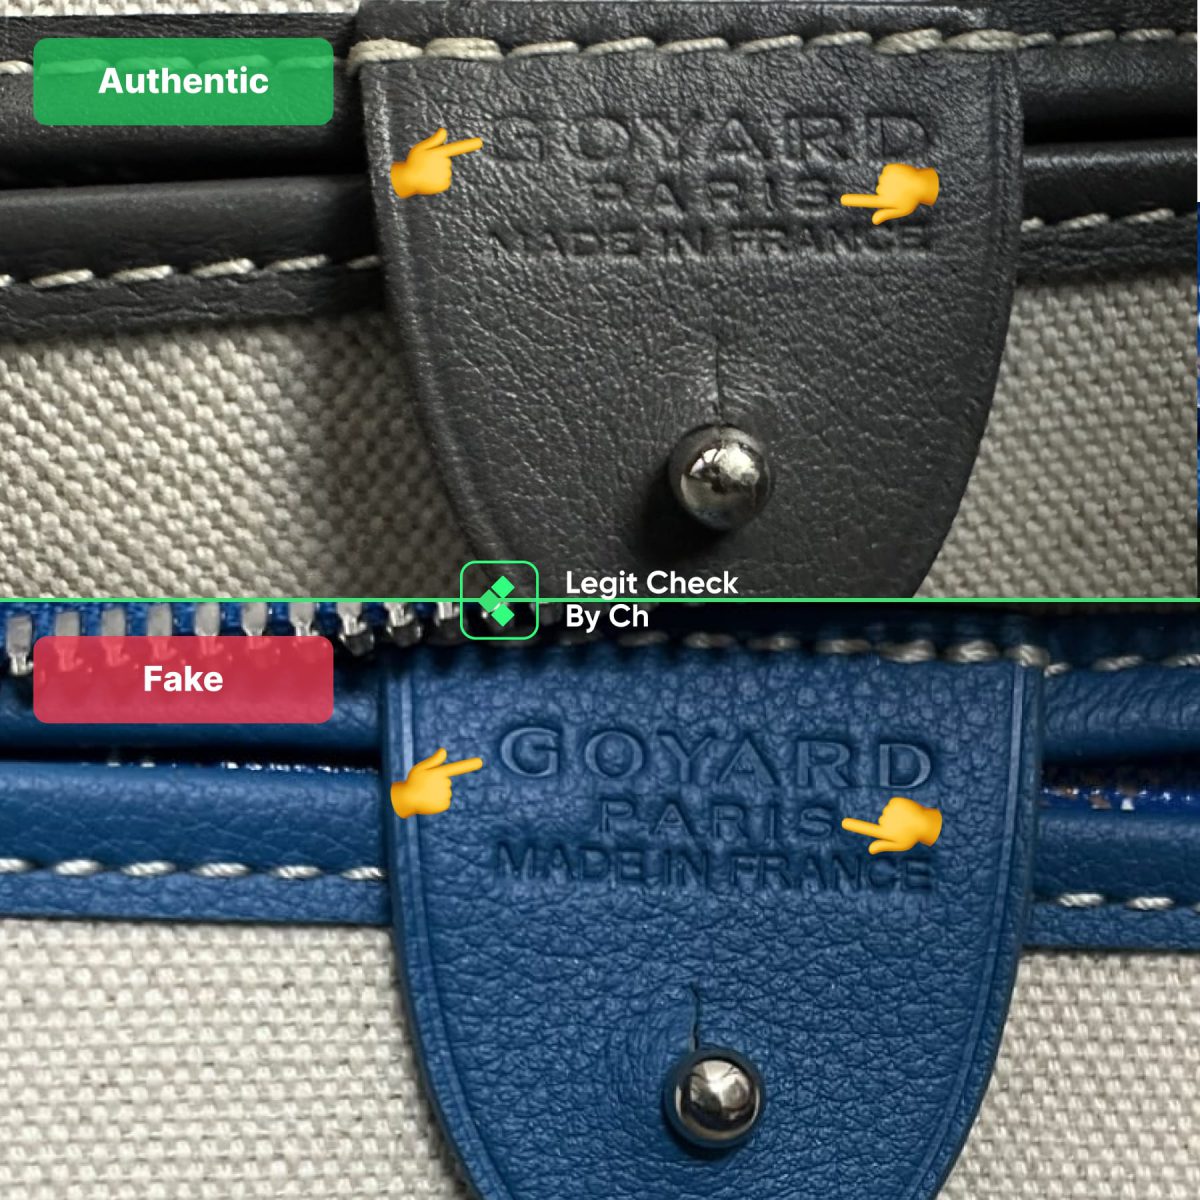 Goyard Bag Label